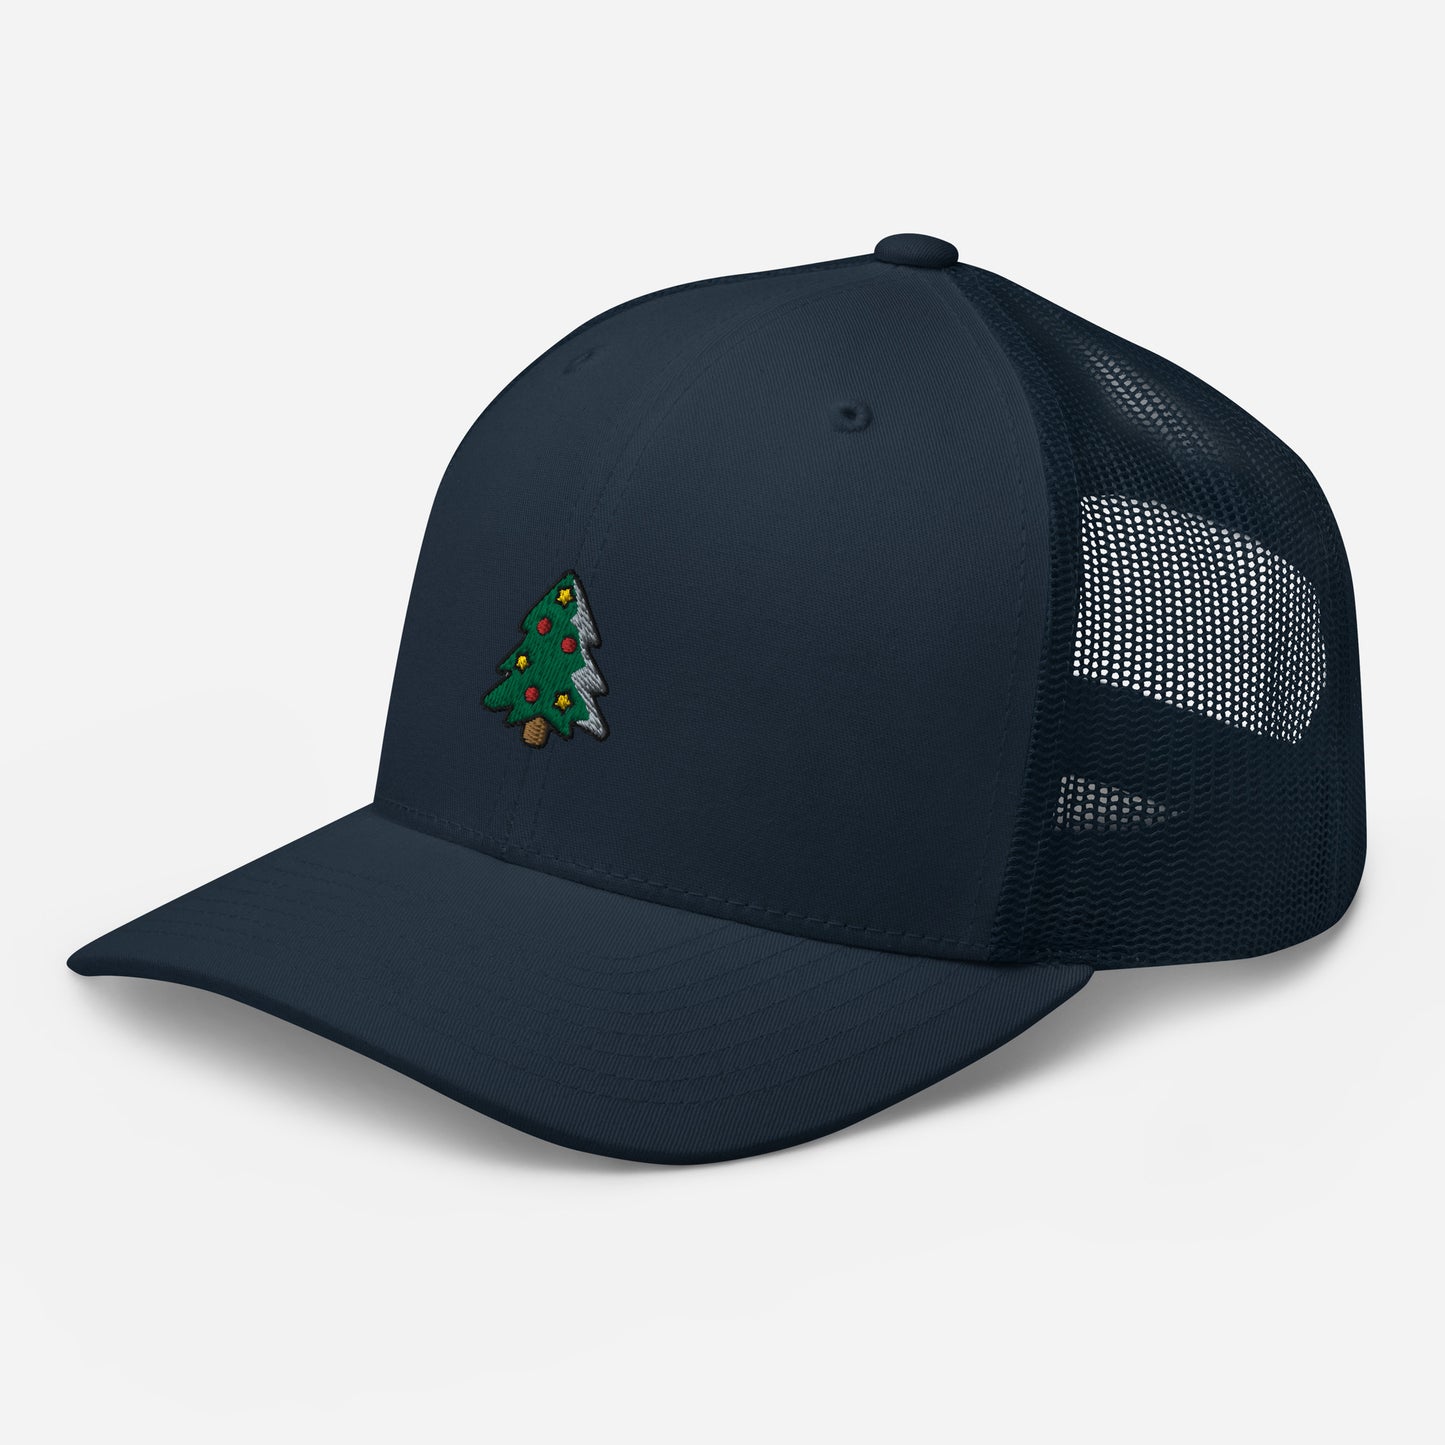 Mesh Cap with Christmas Tree Symbol